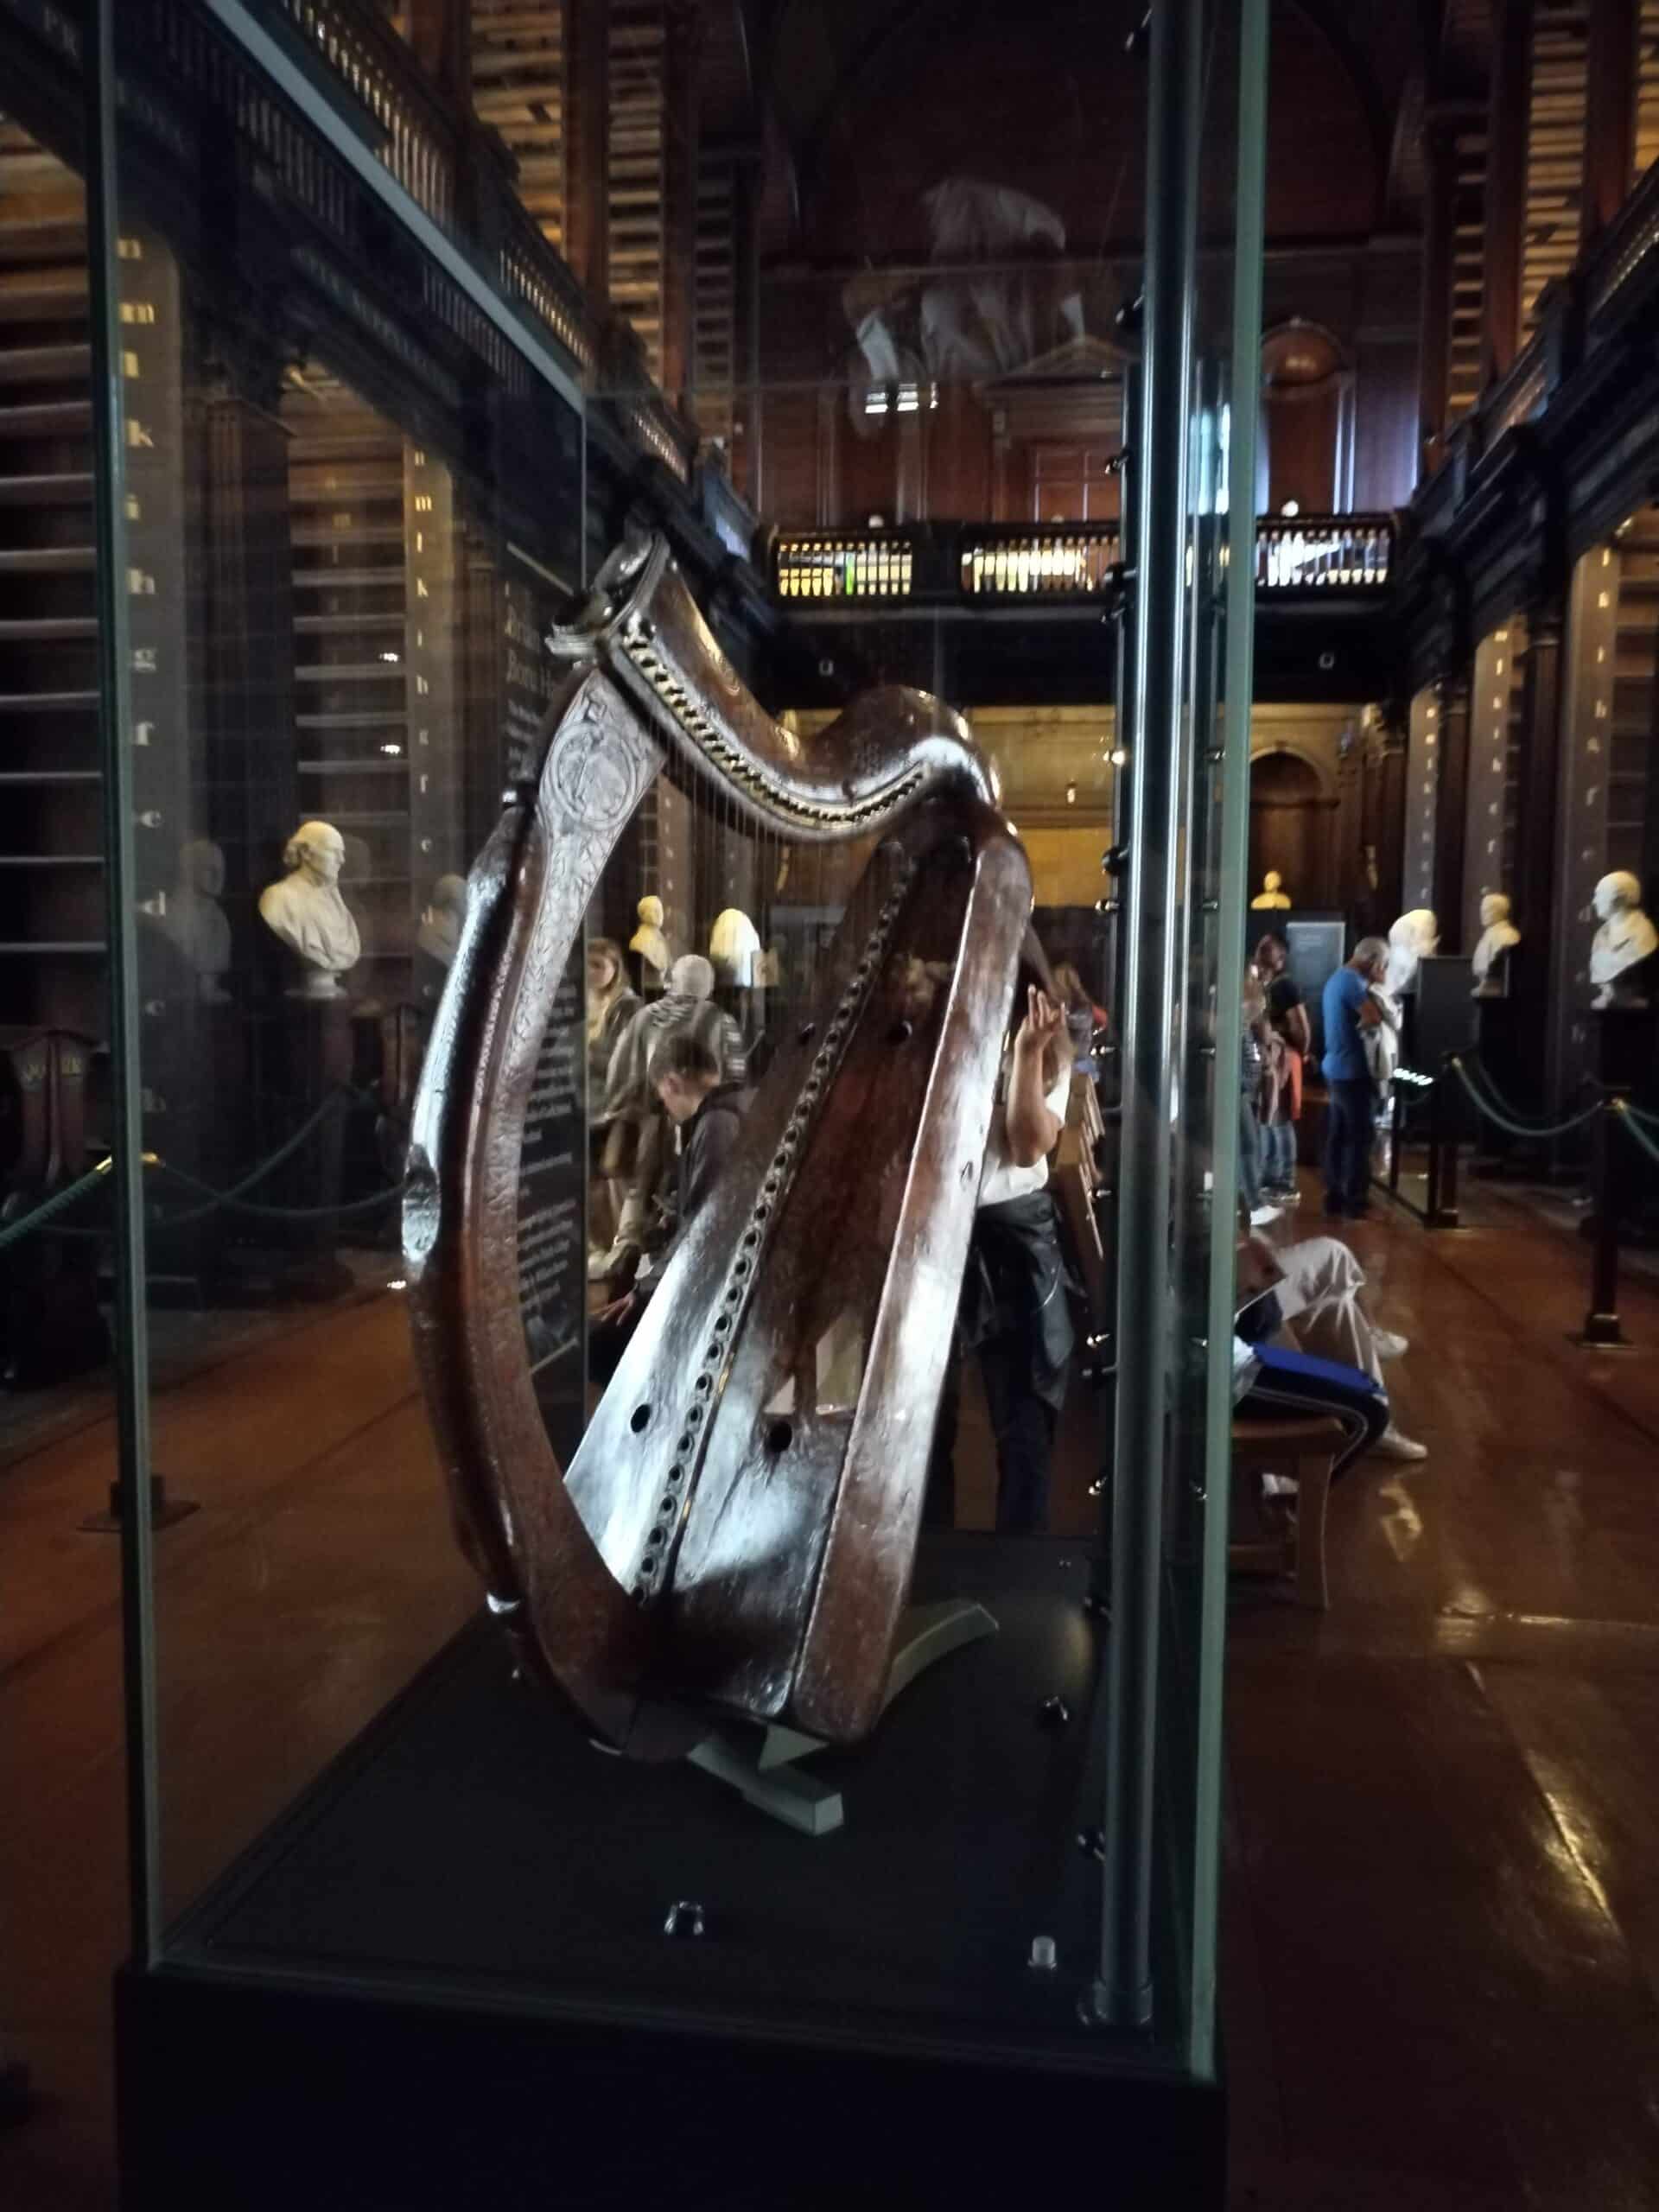 Brian Boru's Harp in the Long Room